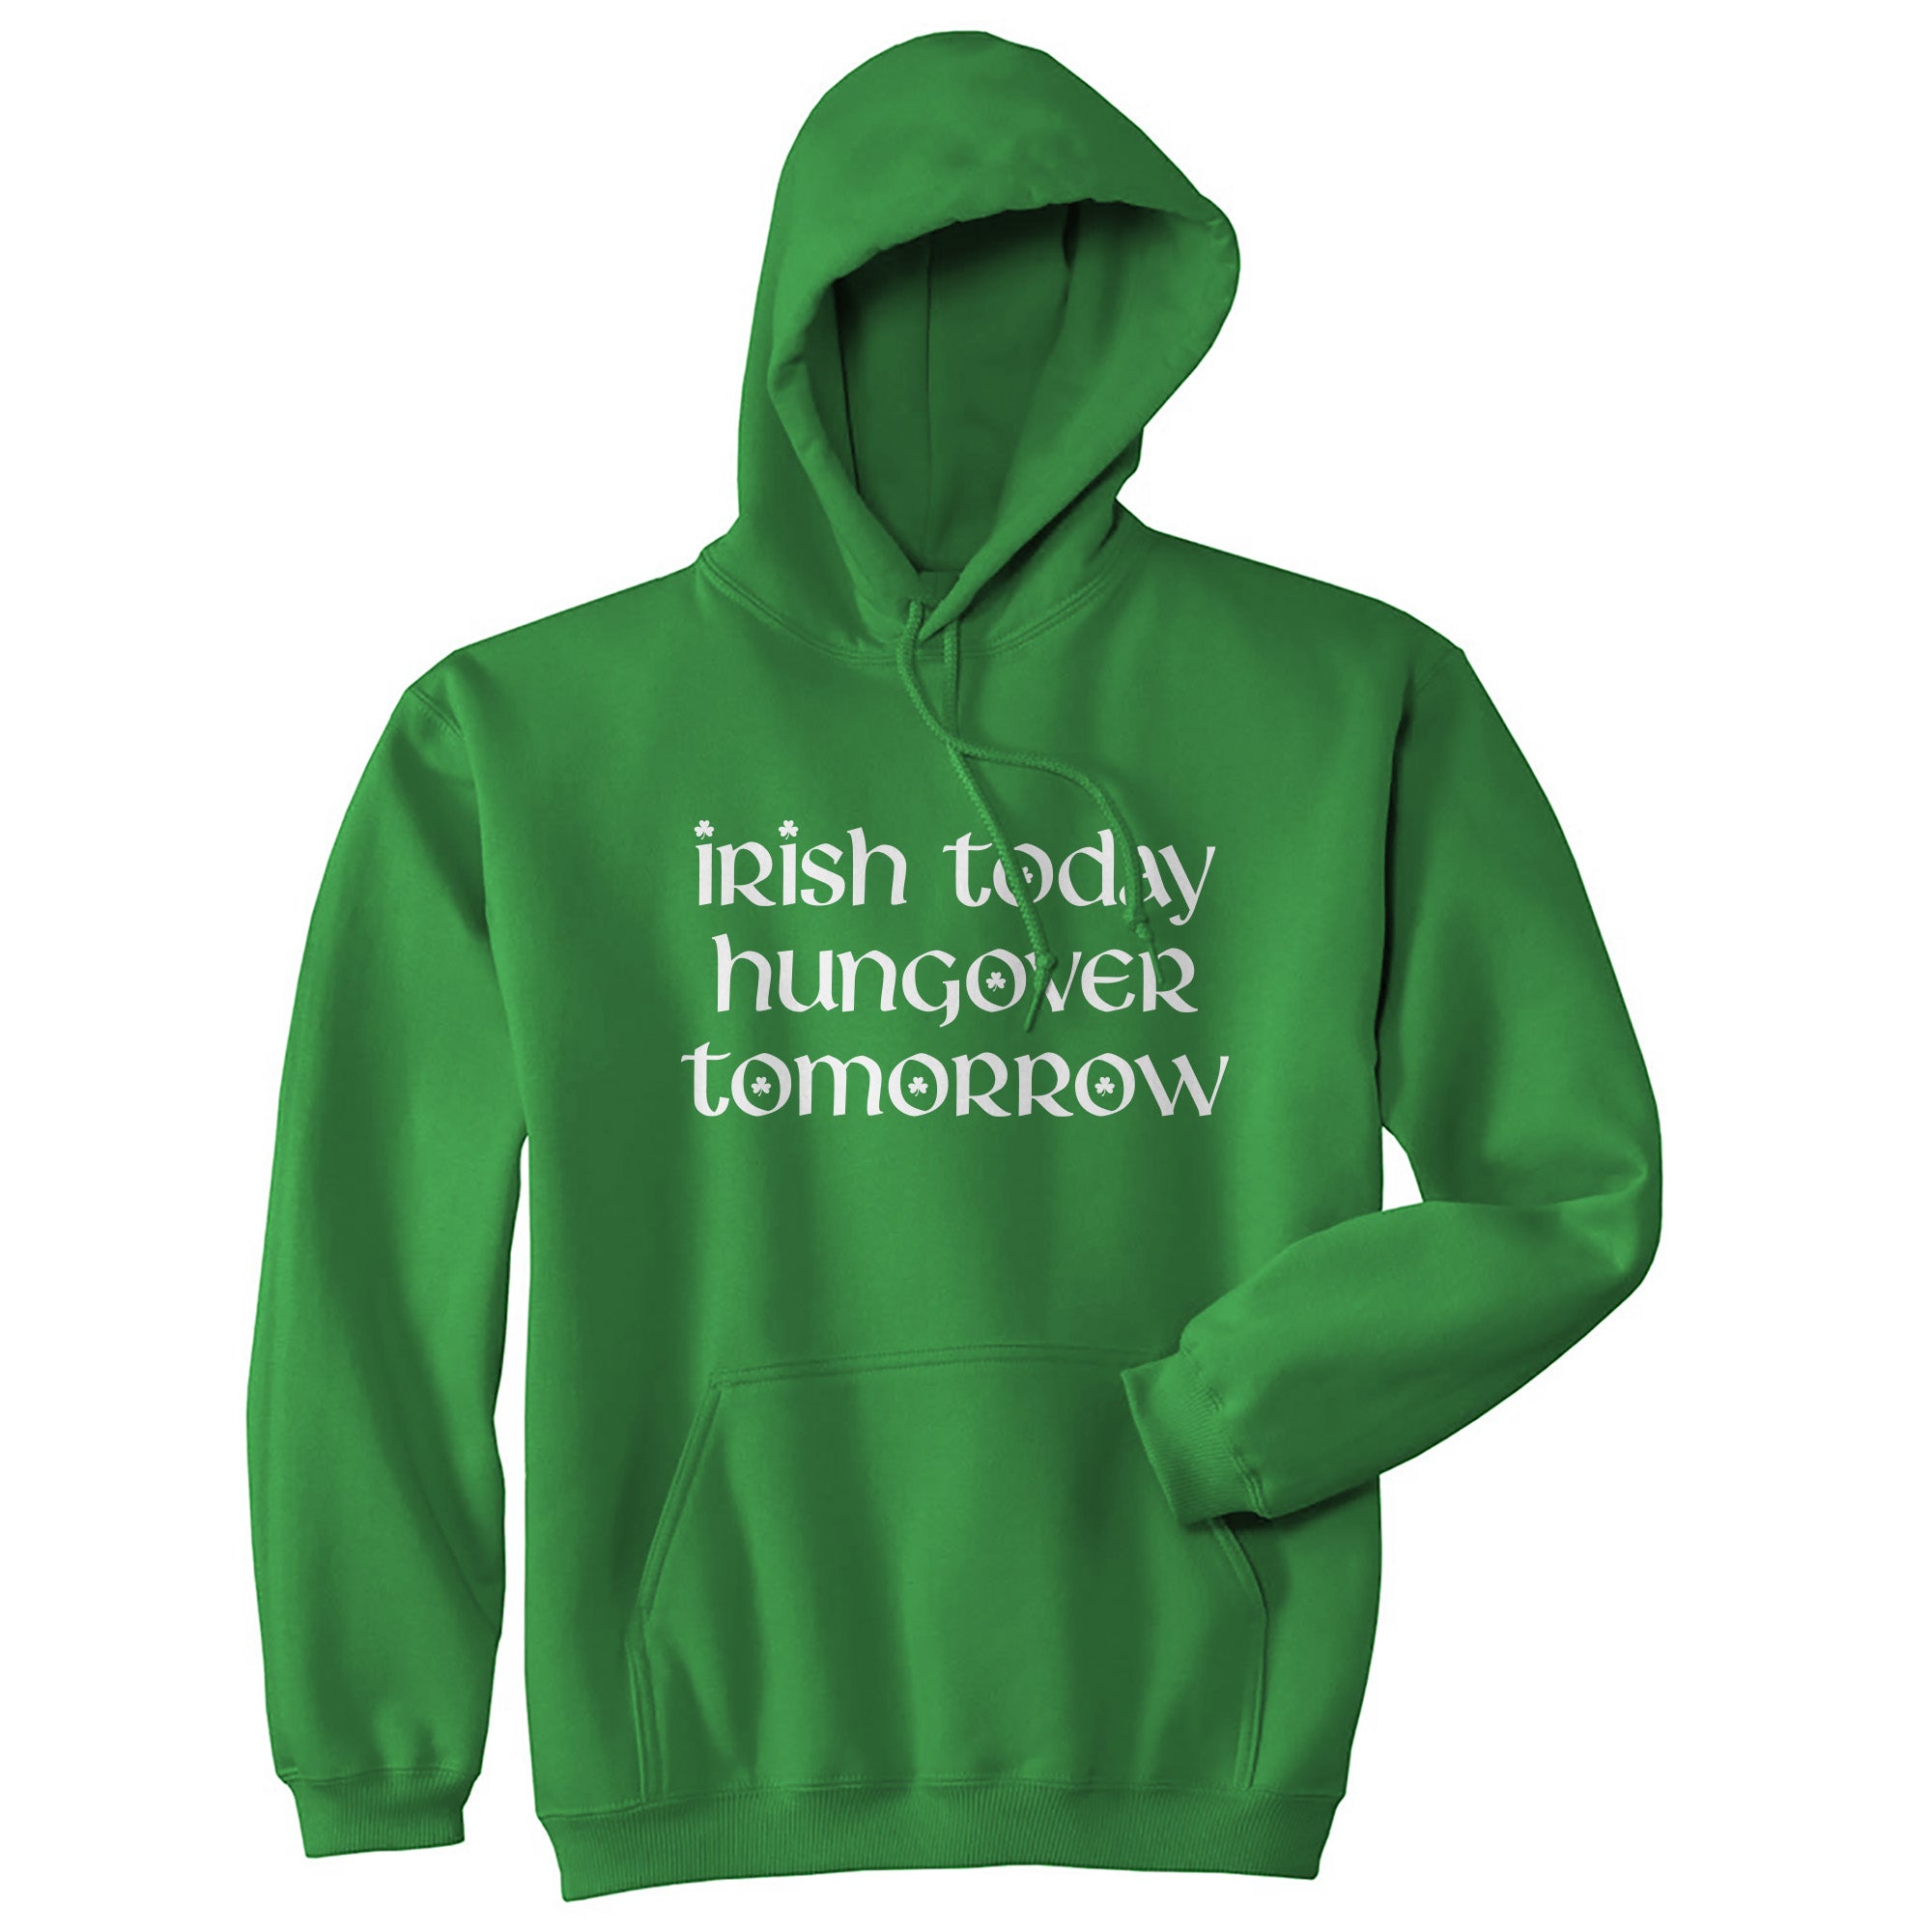 Funny Green Irish Today Hungover Tomorrow Hoodie Nerdy Saint Patrick's Day Drinking Tee